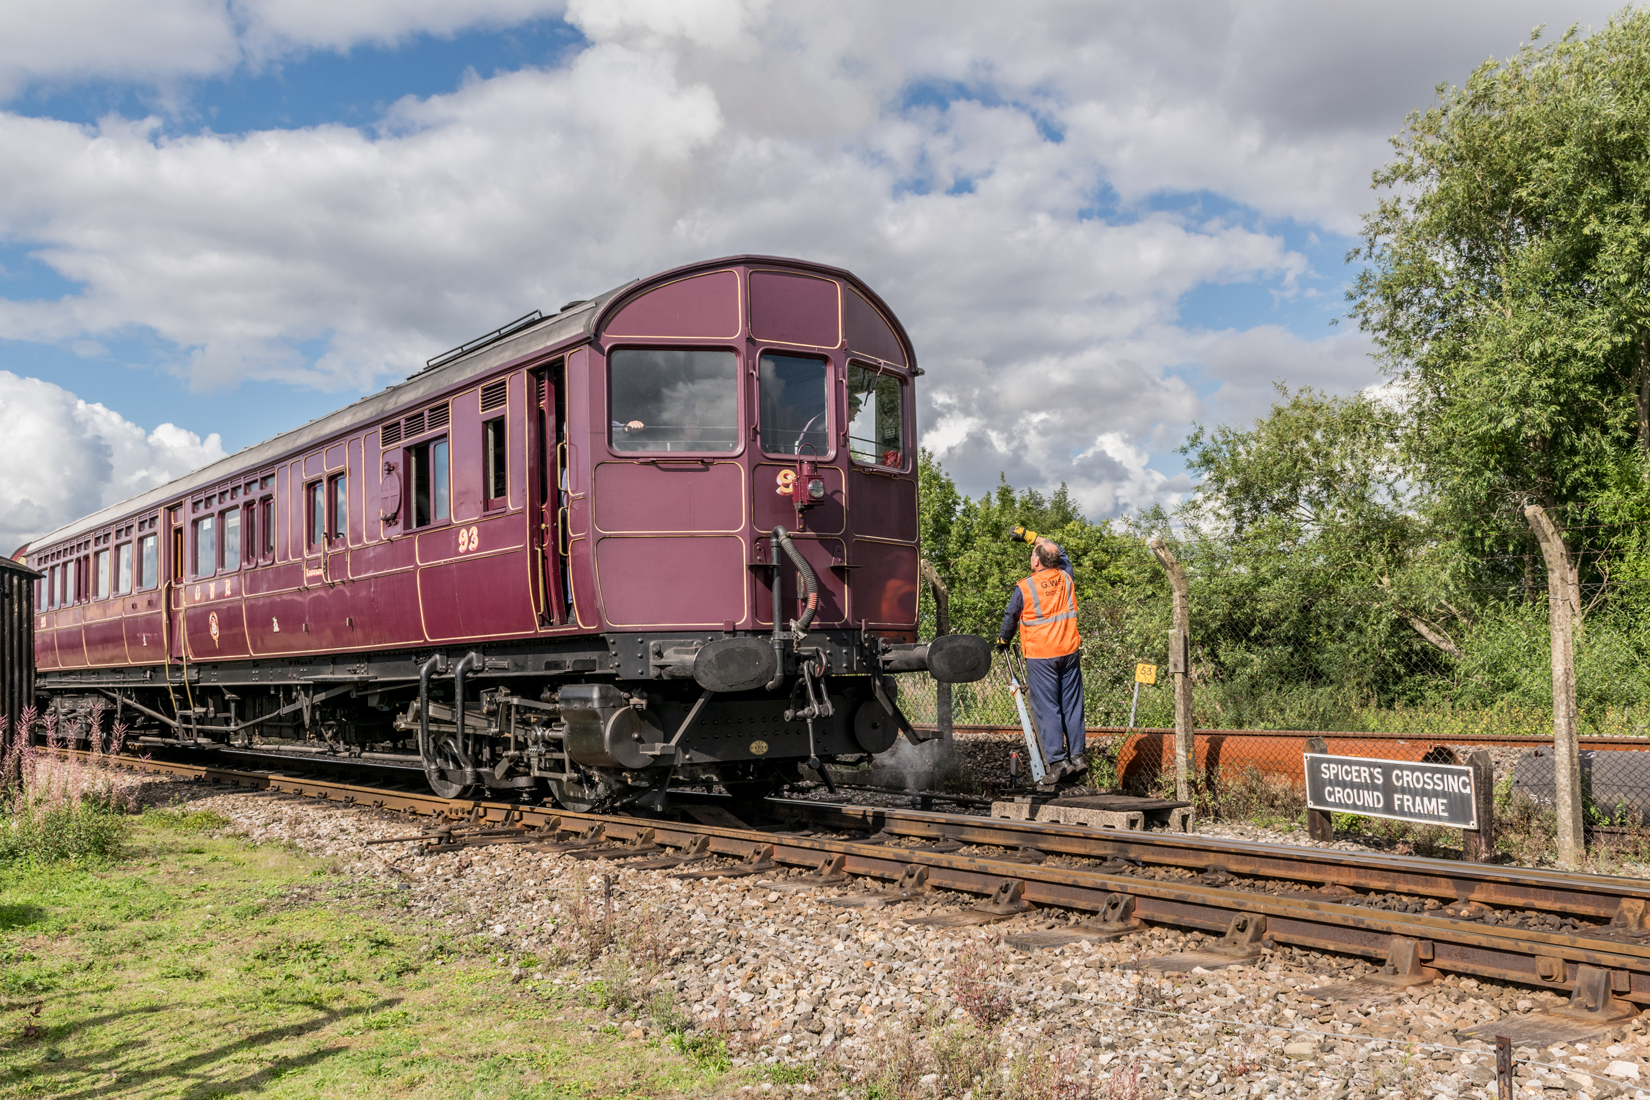 Steam Railmotor No. 93 at Spicers Crossing